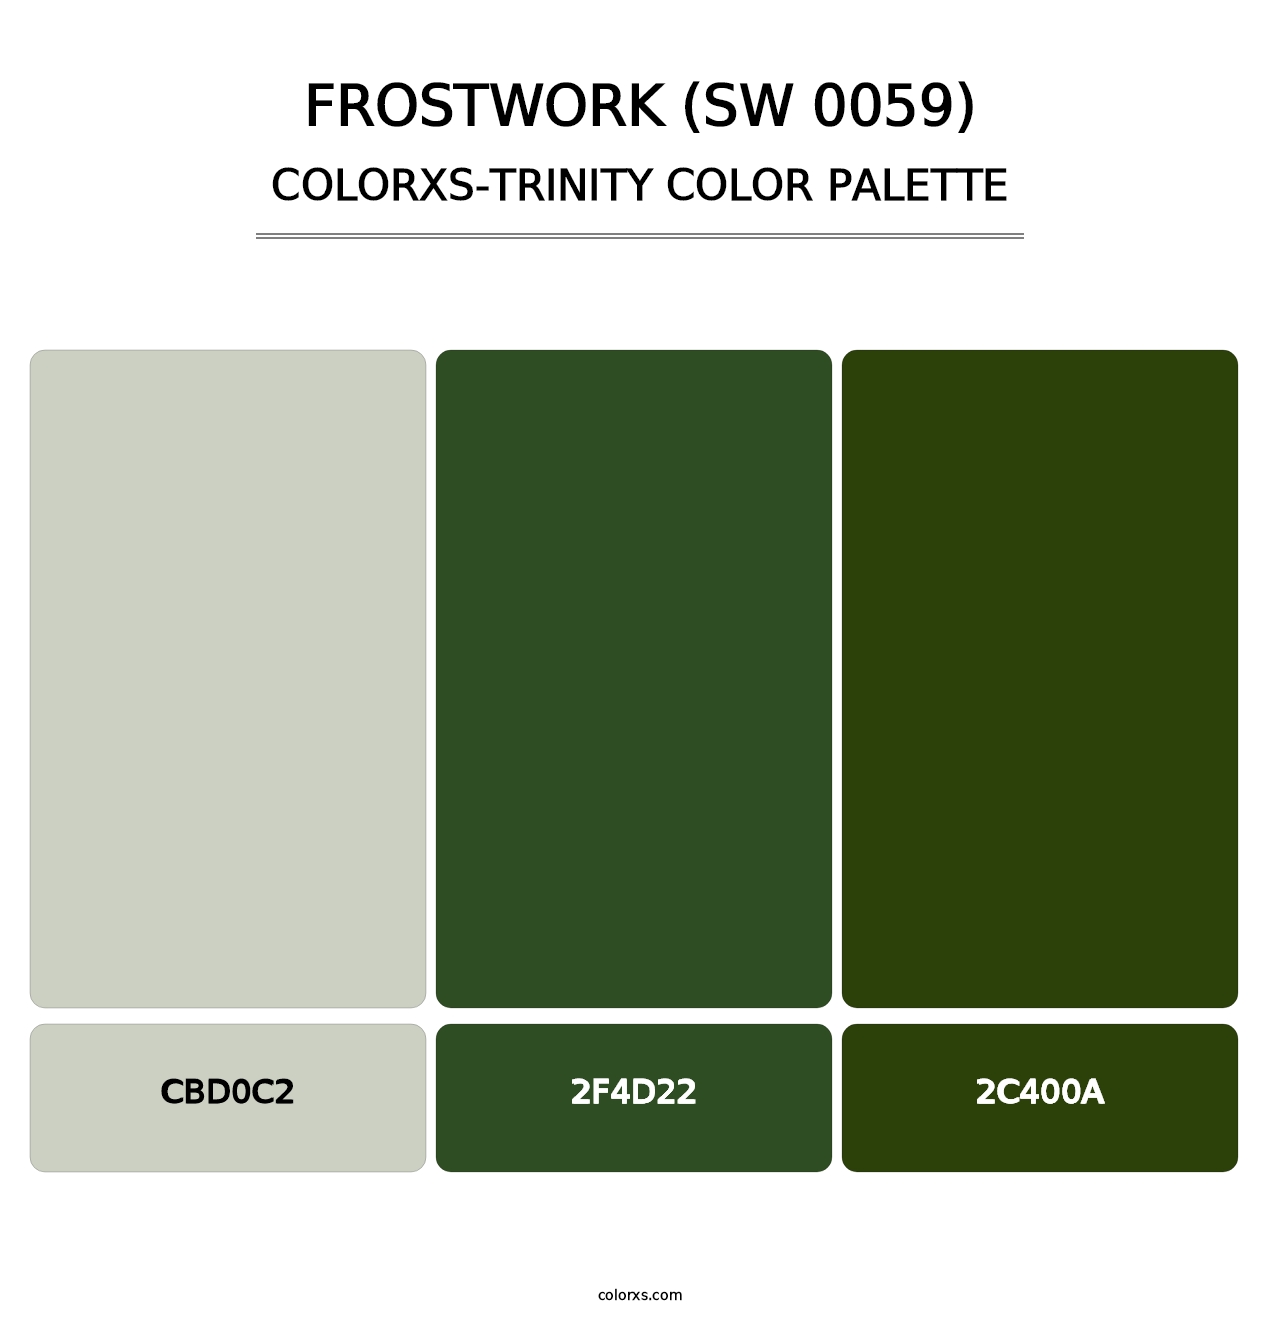 Frostwork (SW 0059) - Colorxs Trinity Palette